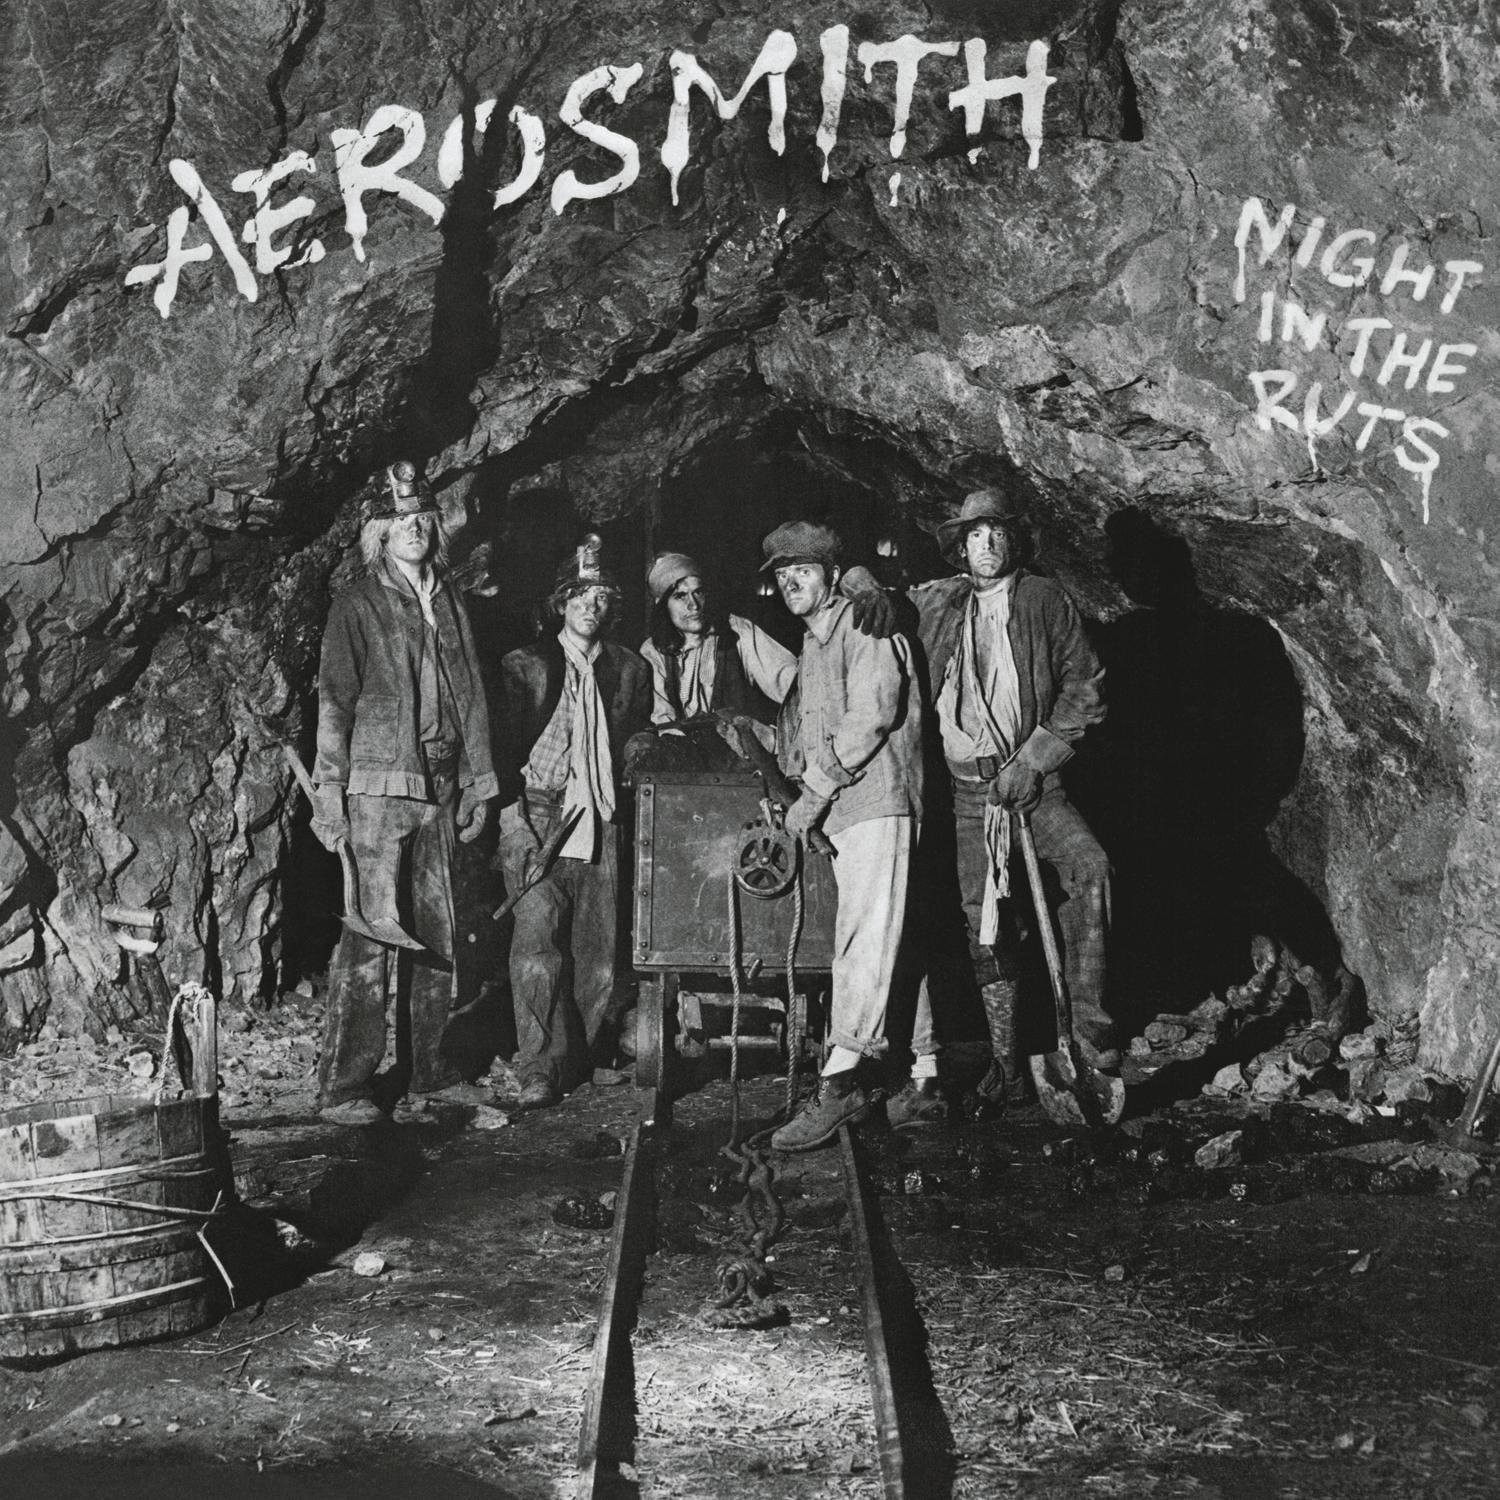 Aerosmith - Night in the Ruts Vinyl LP